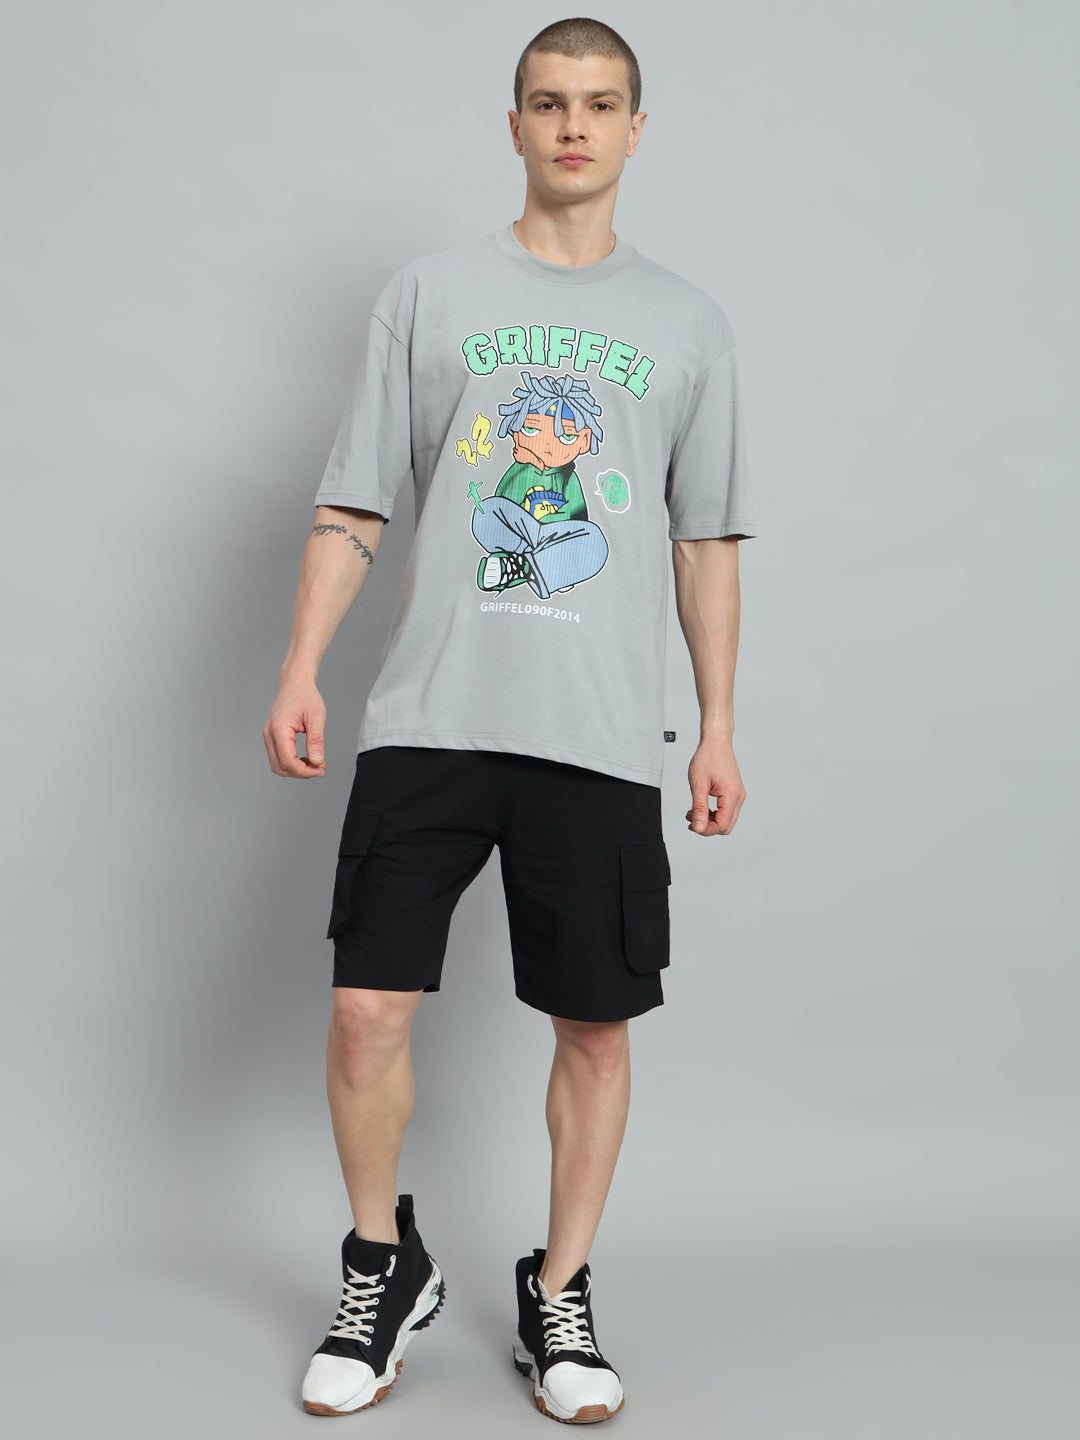 Anime T-shirt and Shorts Set